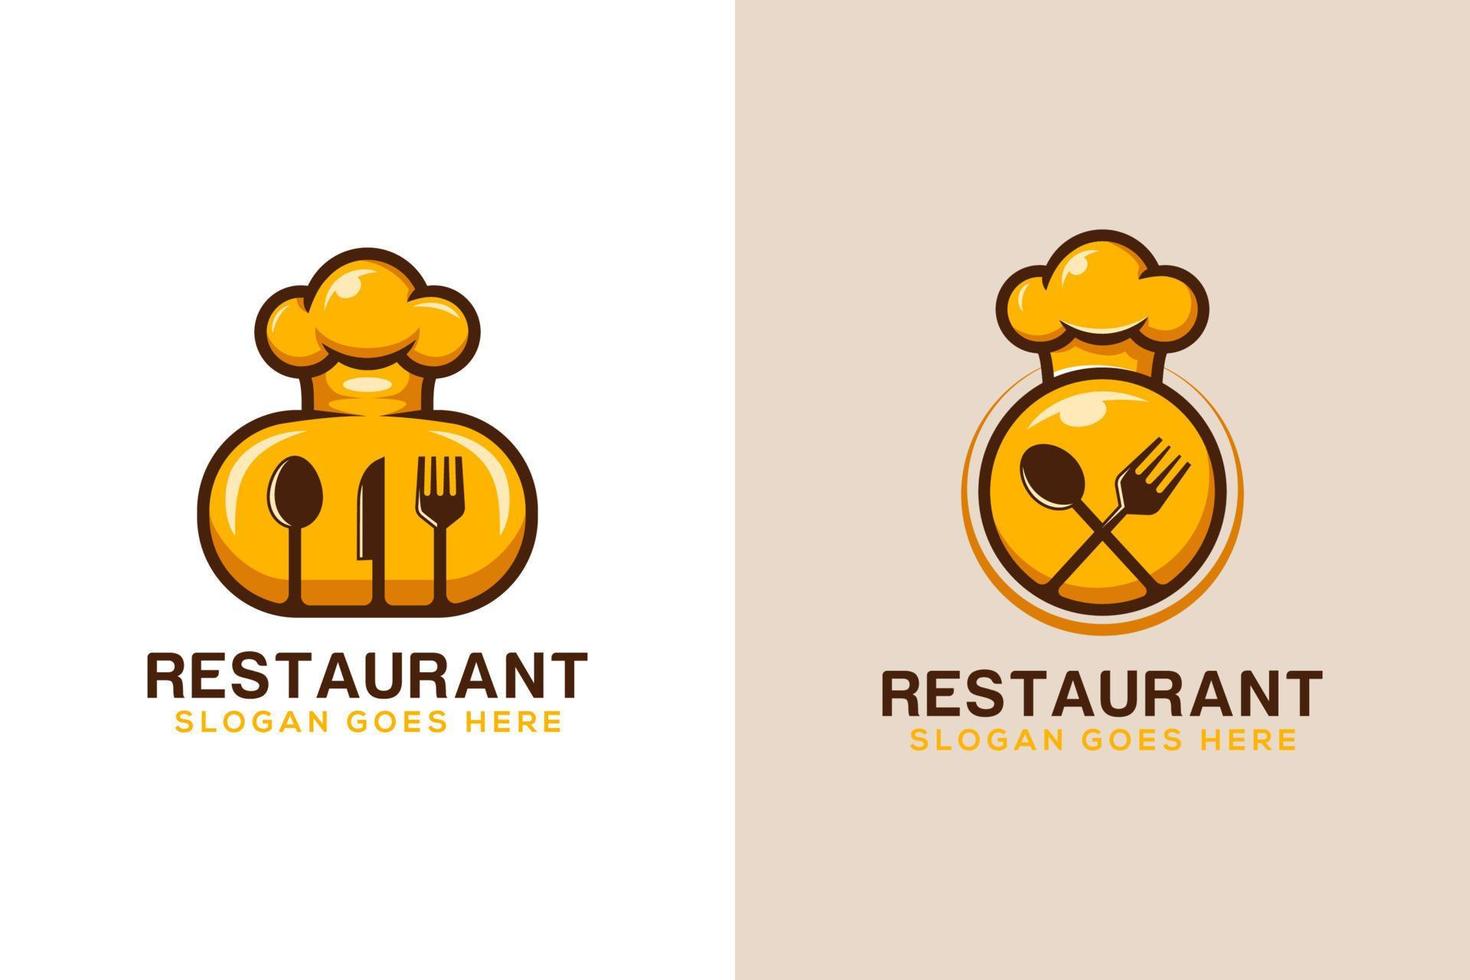 logo design of restaurant good food symbol, modern vintage food logo with two versions vector